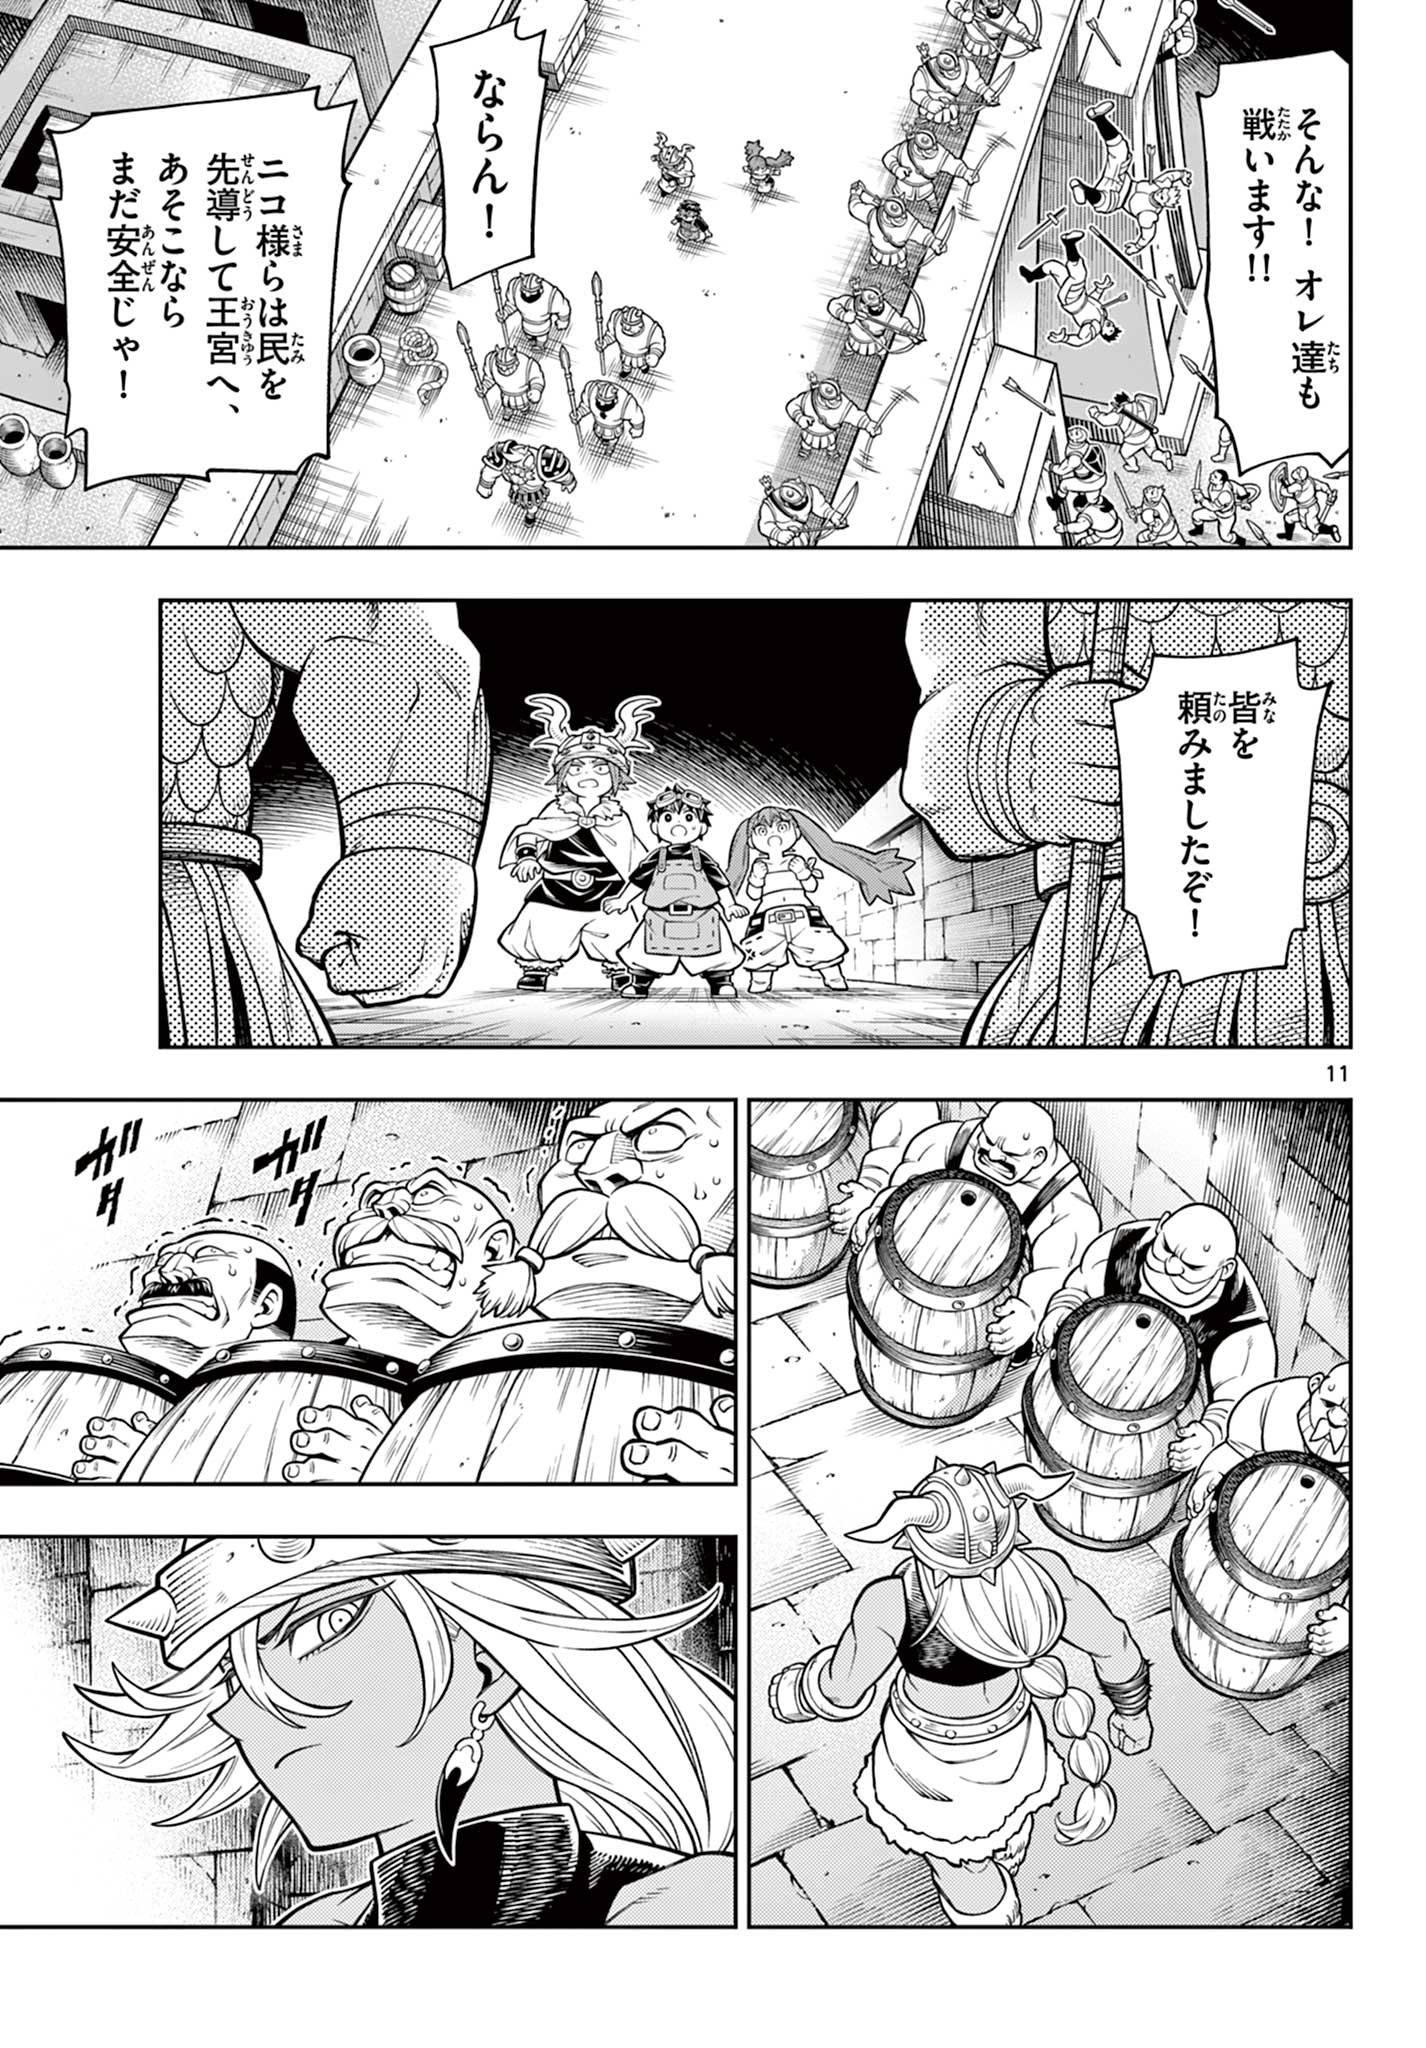 Soara to Mamono no ie - Chapter 28 - Page 11